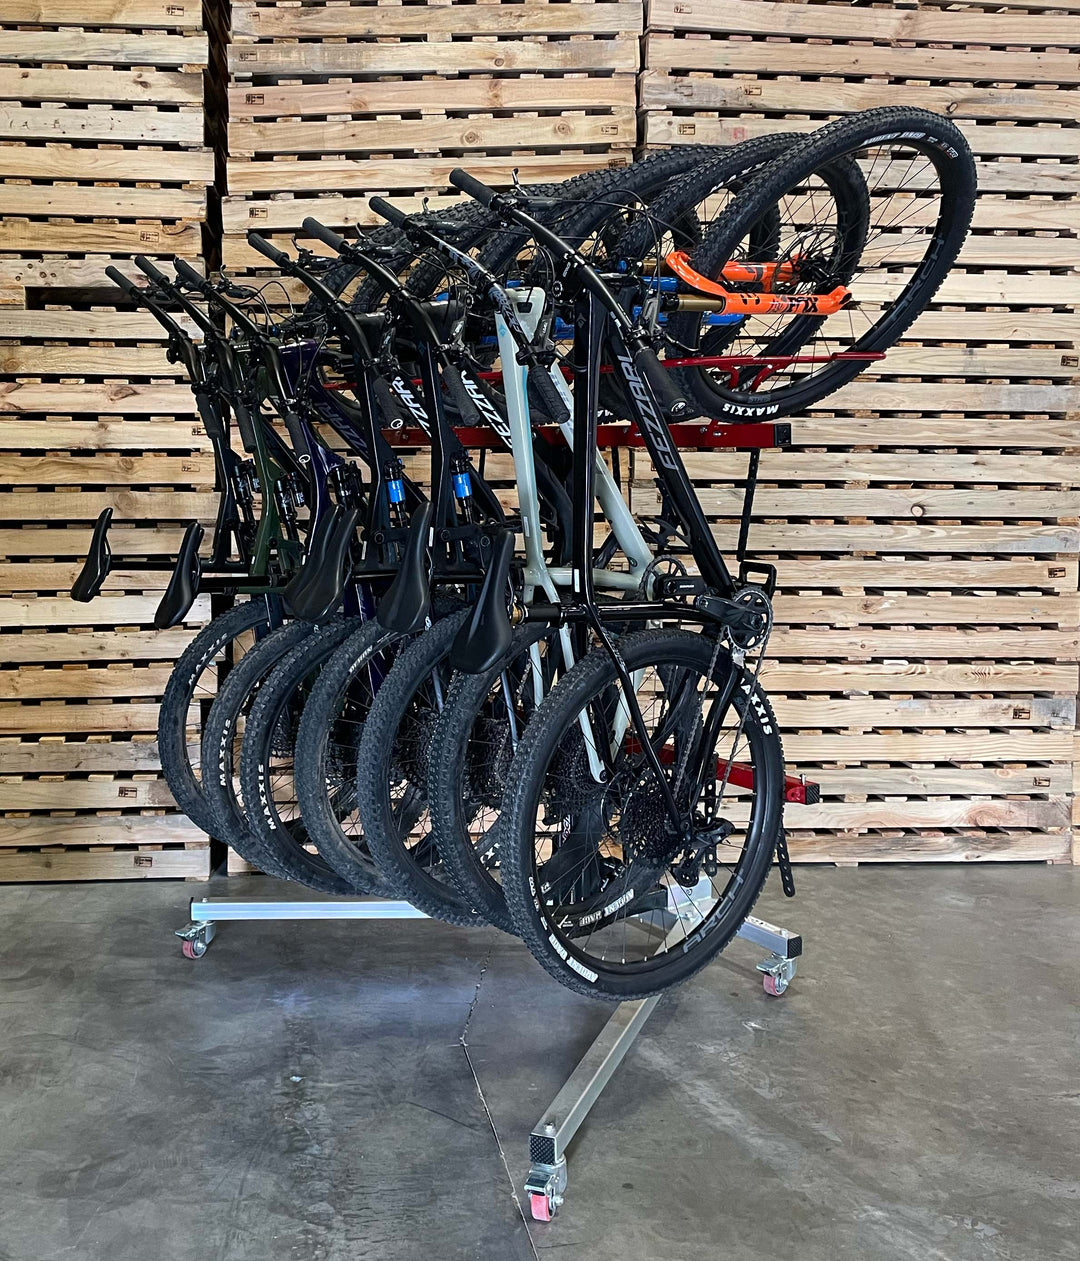 Bike Rack Floor Stand – VelociRAX